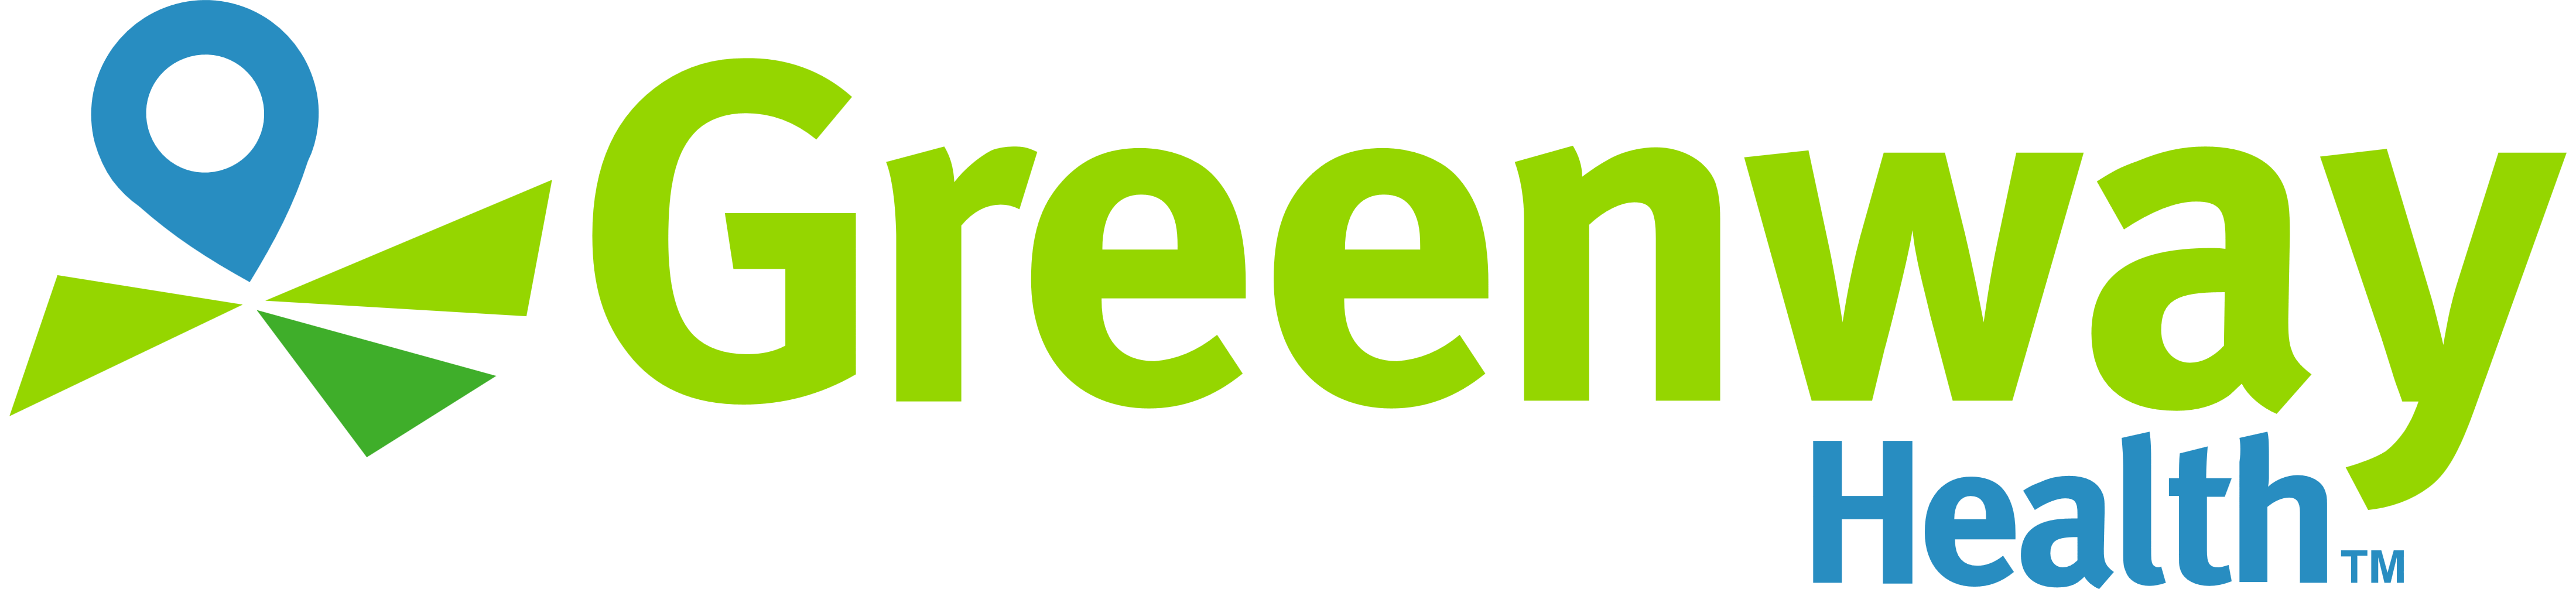 GreenwayHealth